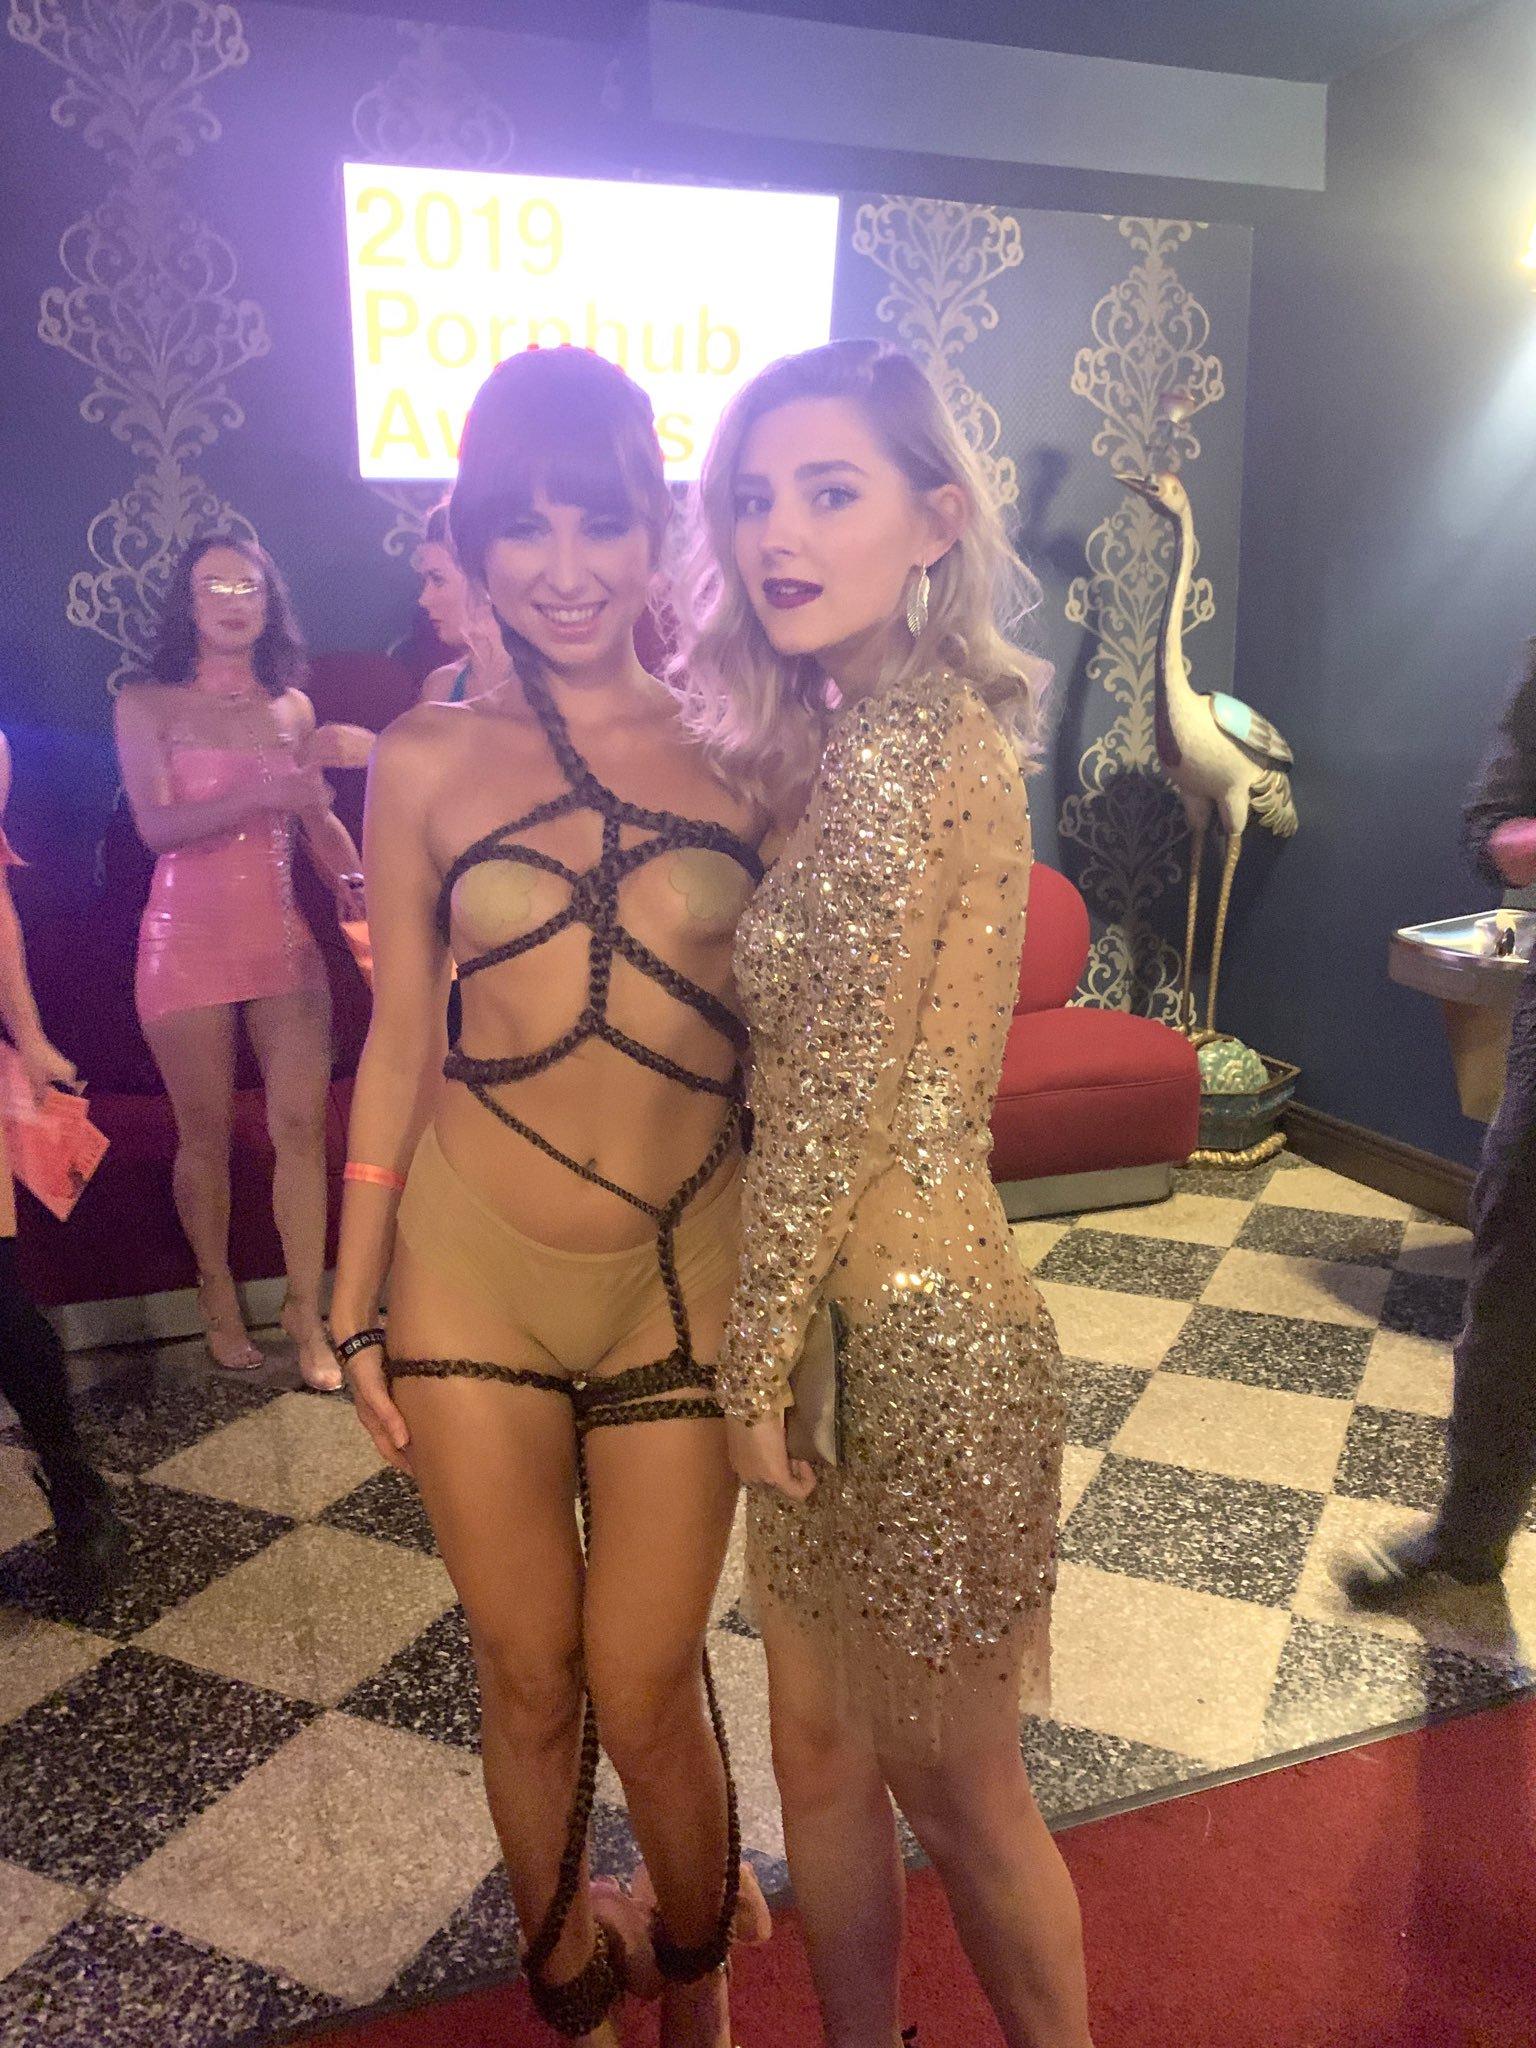 Pron 2019 - Riley Reid in 2019 Pornhub awards Porn Pic - EPORNER